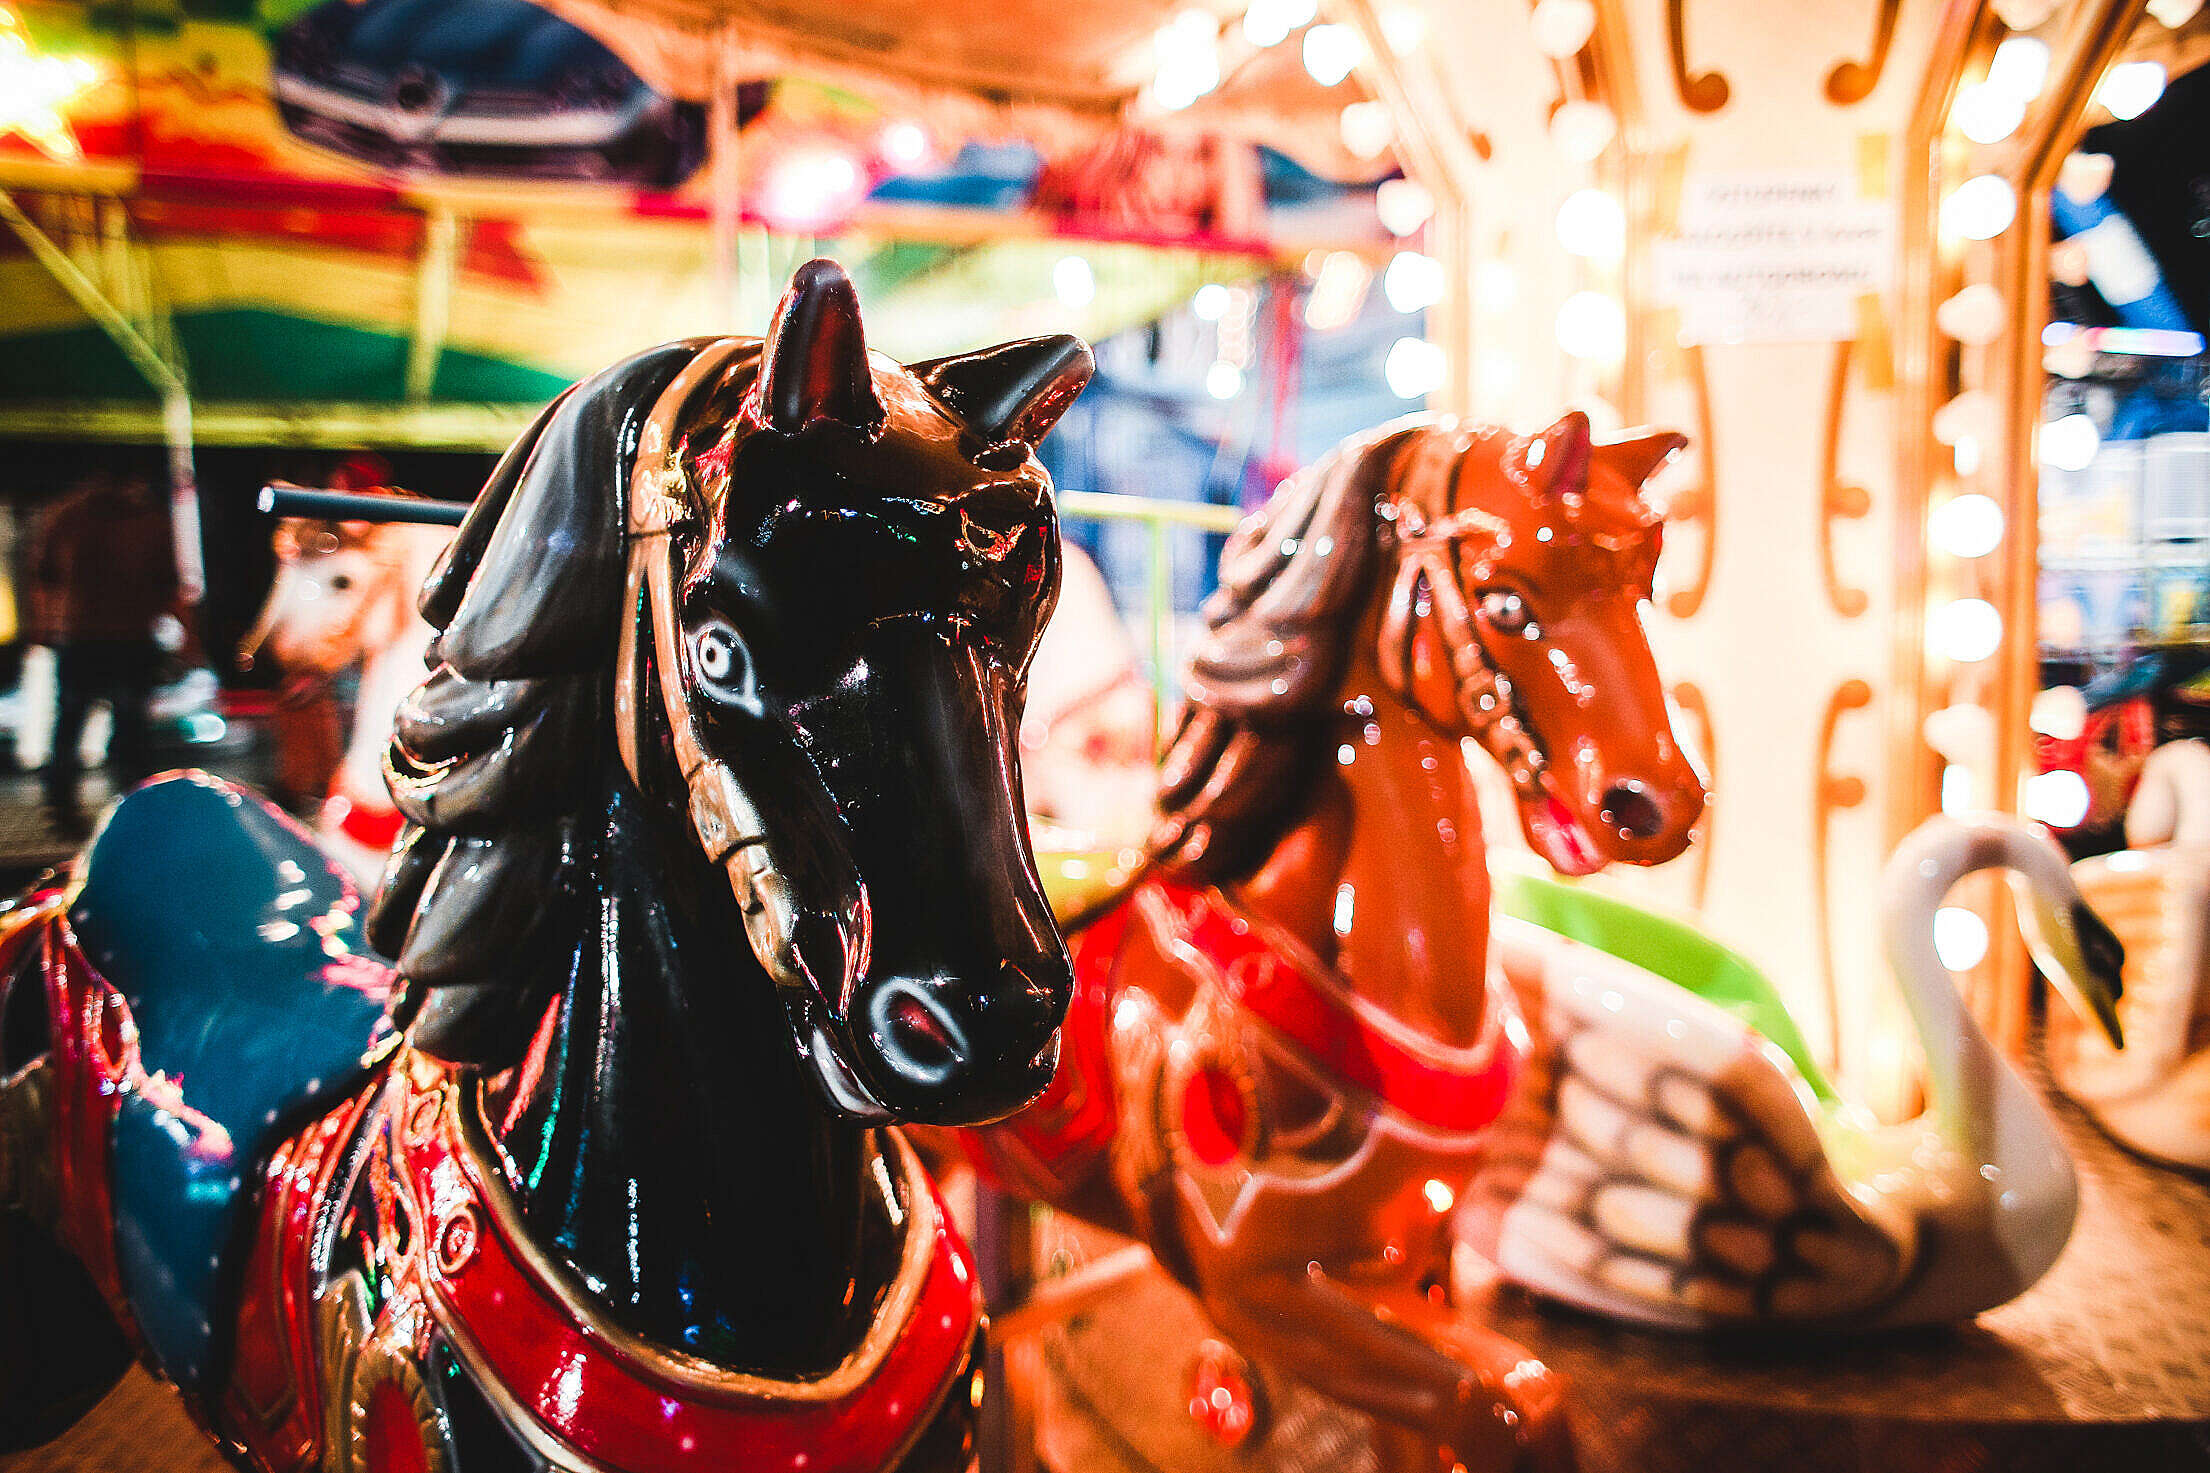 Traditional Carousel Horses on a Fun Fair Ride Free Stock Photo